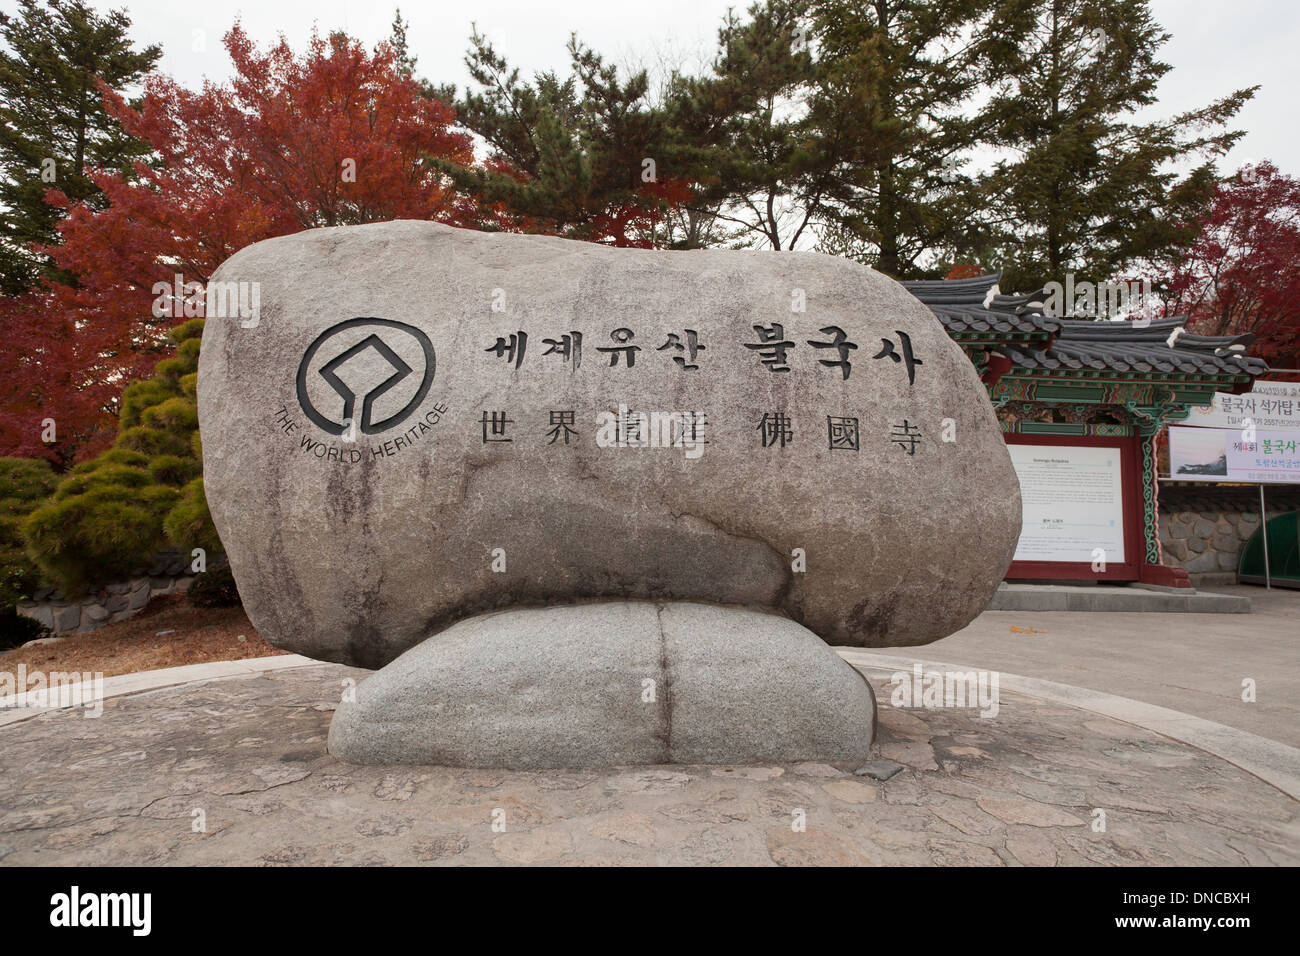 Buddhistischen Tempel Bulguksa UNESCO Weltkulturerbe Stein Marker - Gyeongju, Südkorea Stockfoto